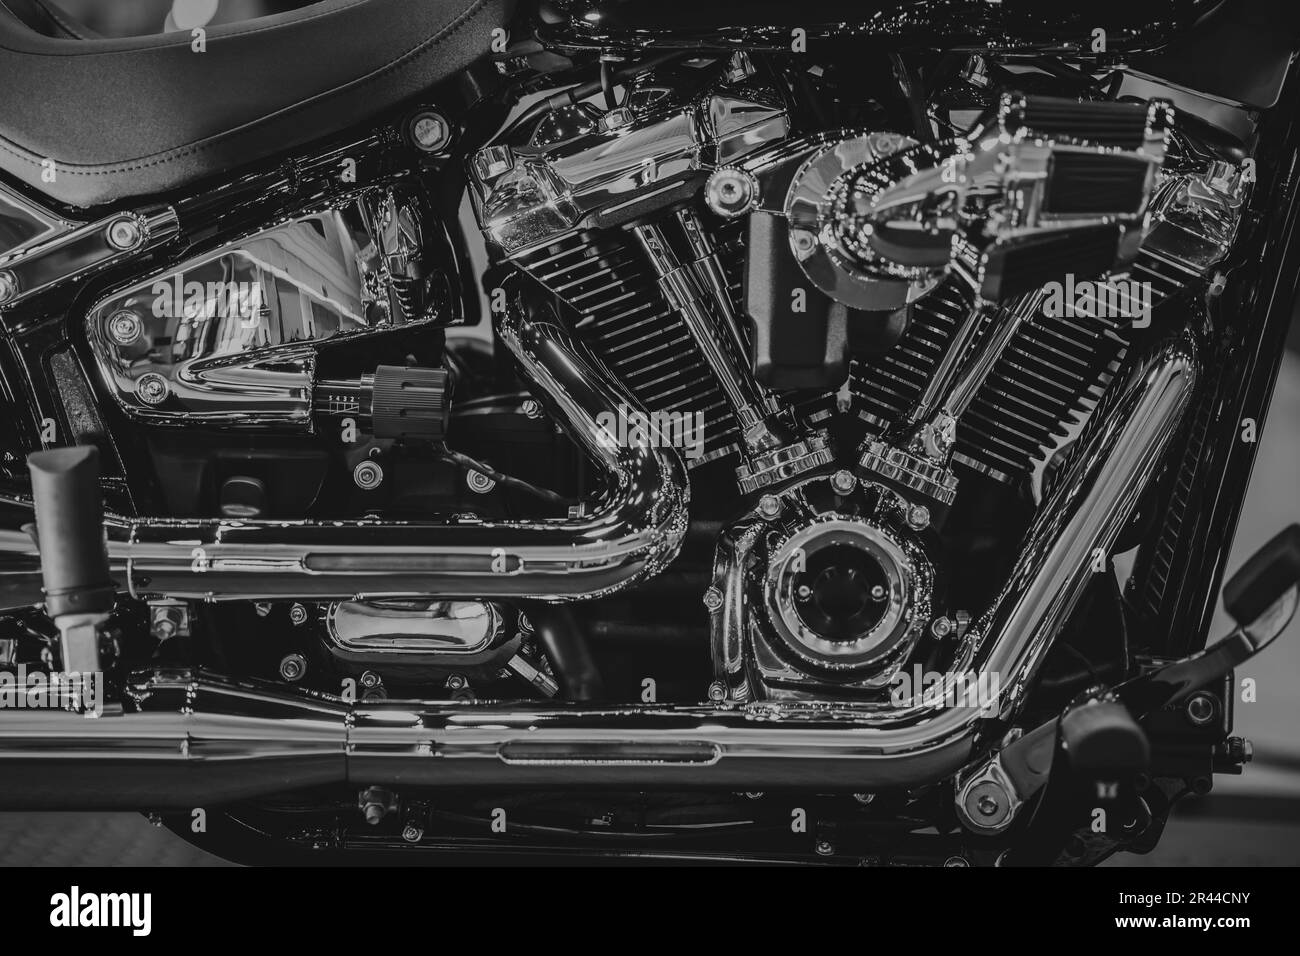 Chopper Motorcycle Engine High Performance, Artistic Luxury Design Street Bike Black and White. Stock Photo